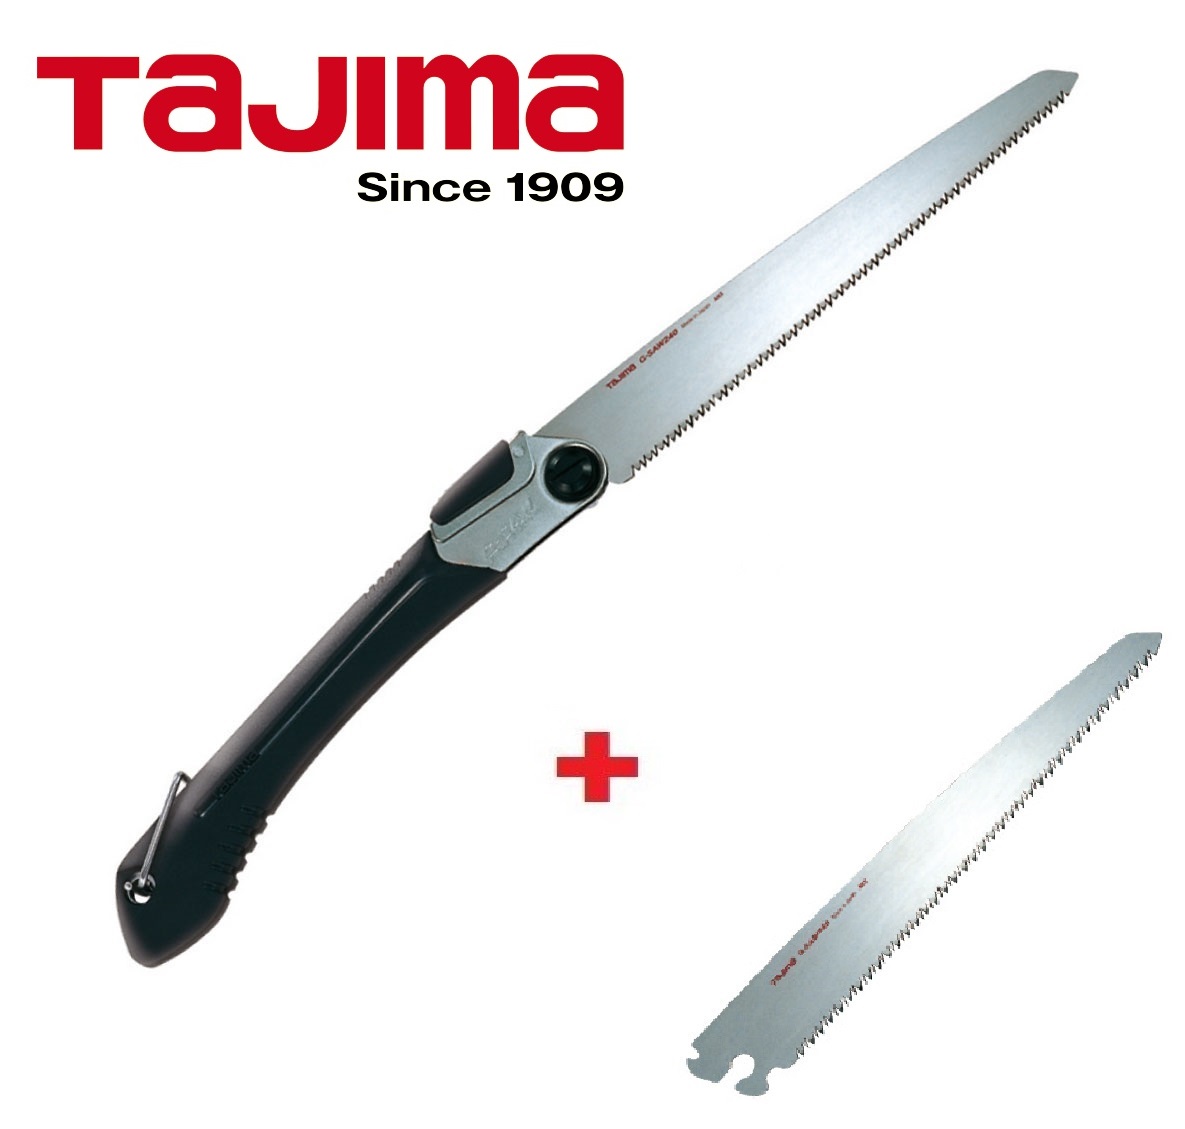 Ножовка складная TAJIMA Rapid-Pull G-Saw GK-G210 (210мм) + запасное полотно GKBG210(210мм) складная пила silky super accel 210 мм 7 5 зубьев